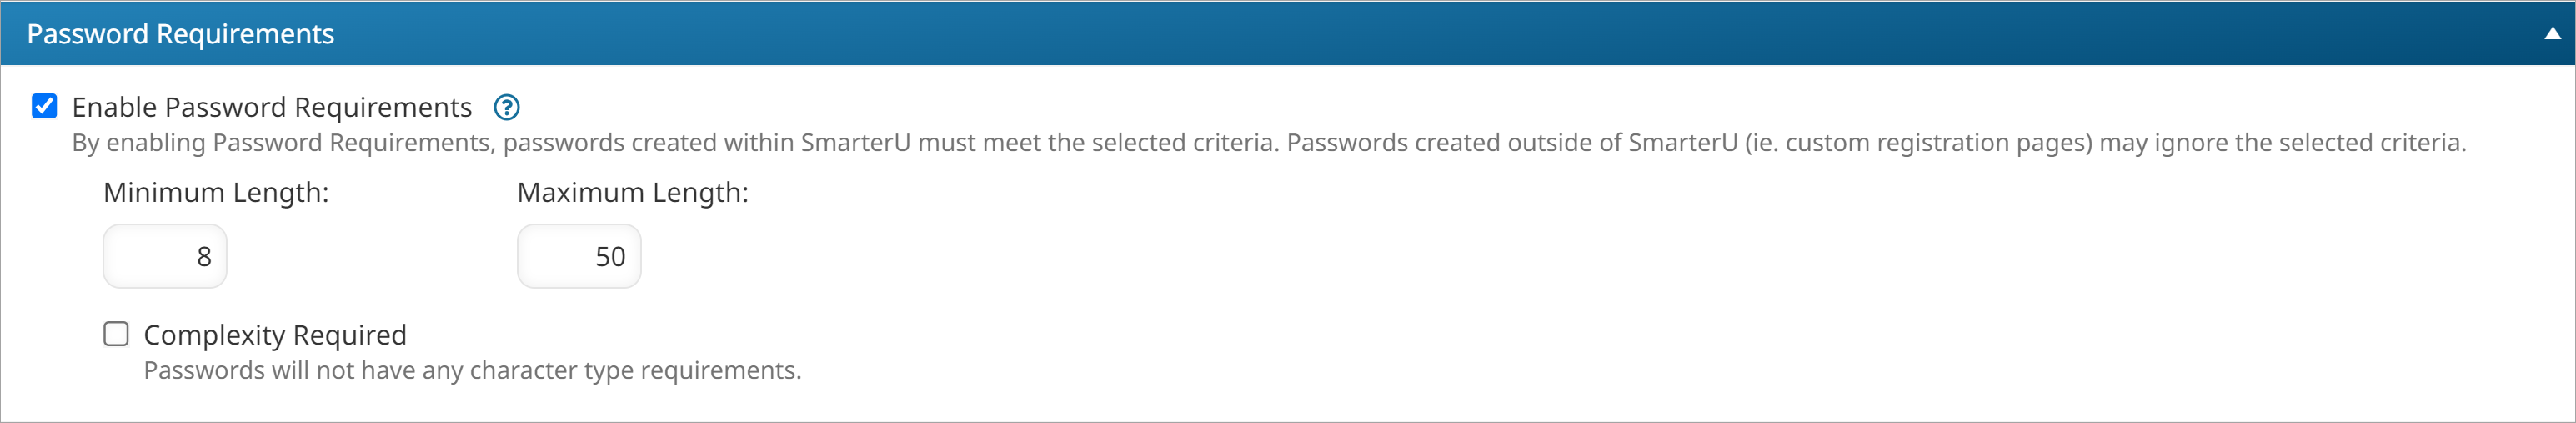 Account Profile - Password Requirements 20220921